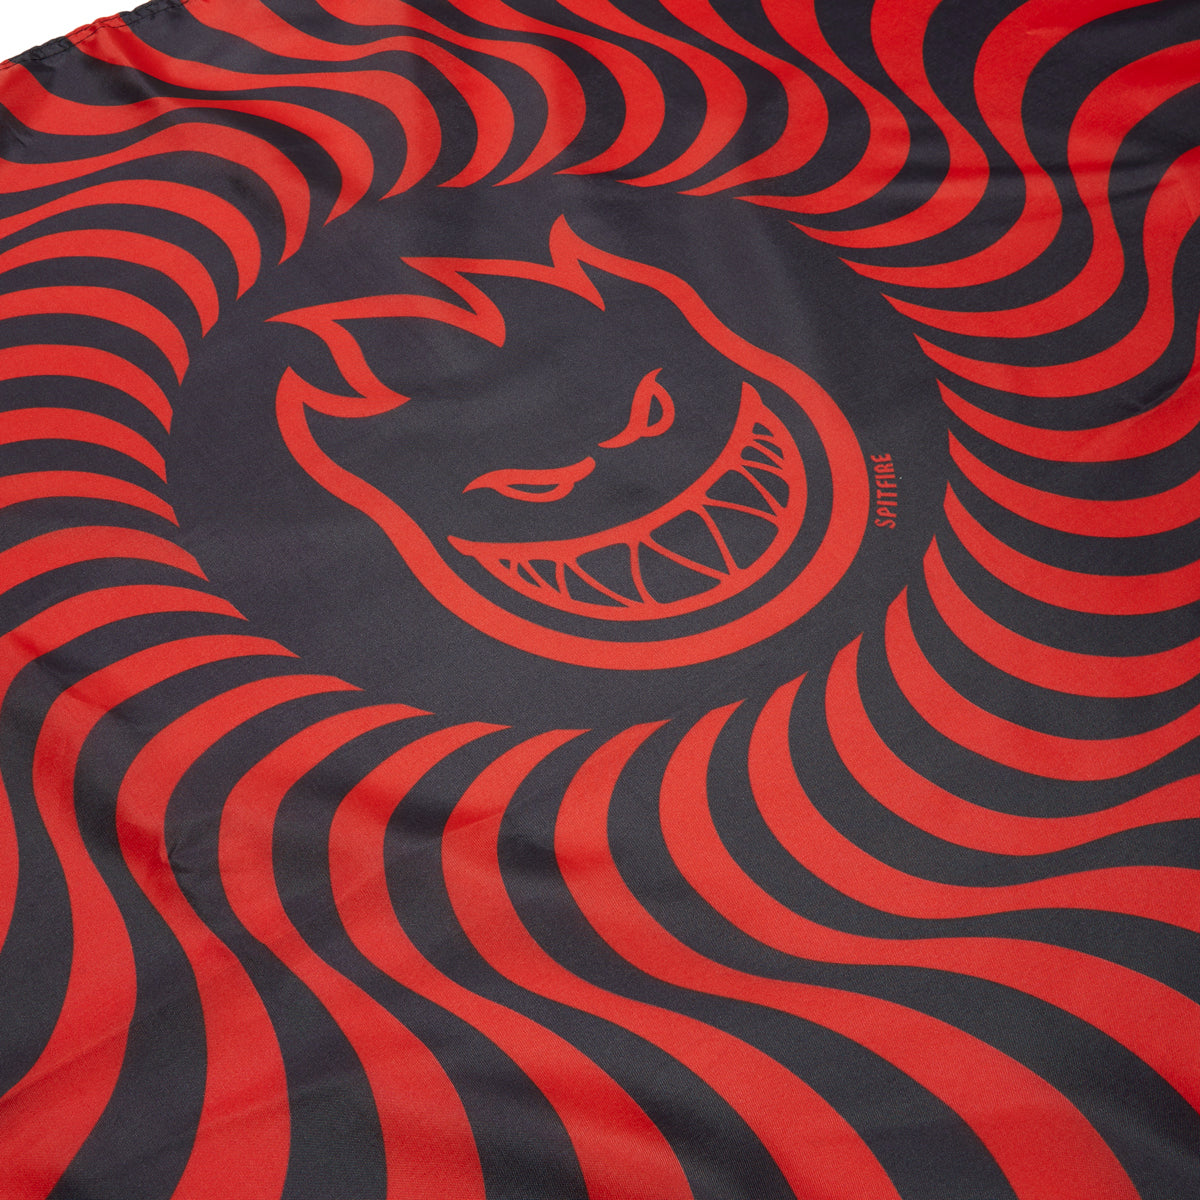 Spitfire Bighead Banner - Red/Black Swirl image 2